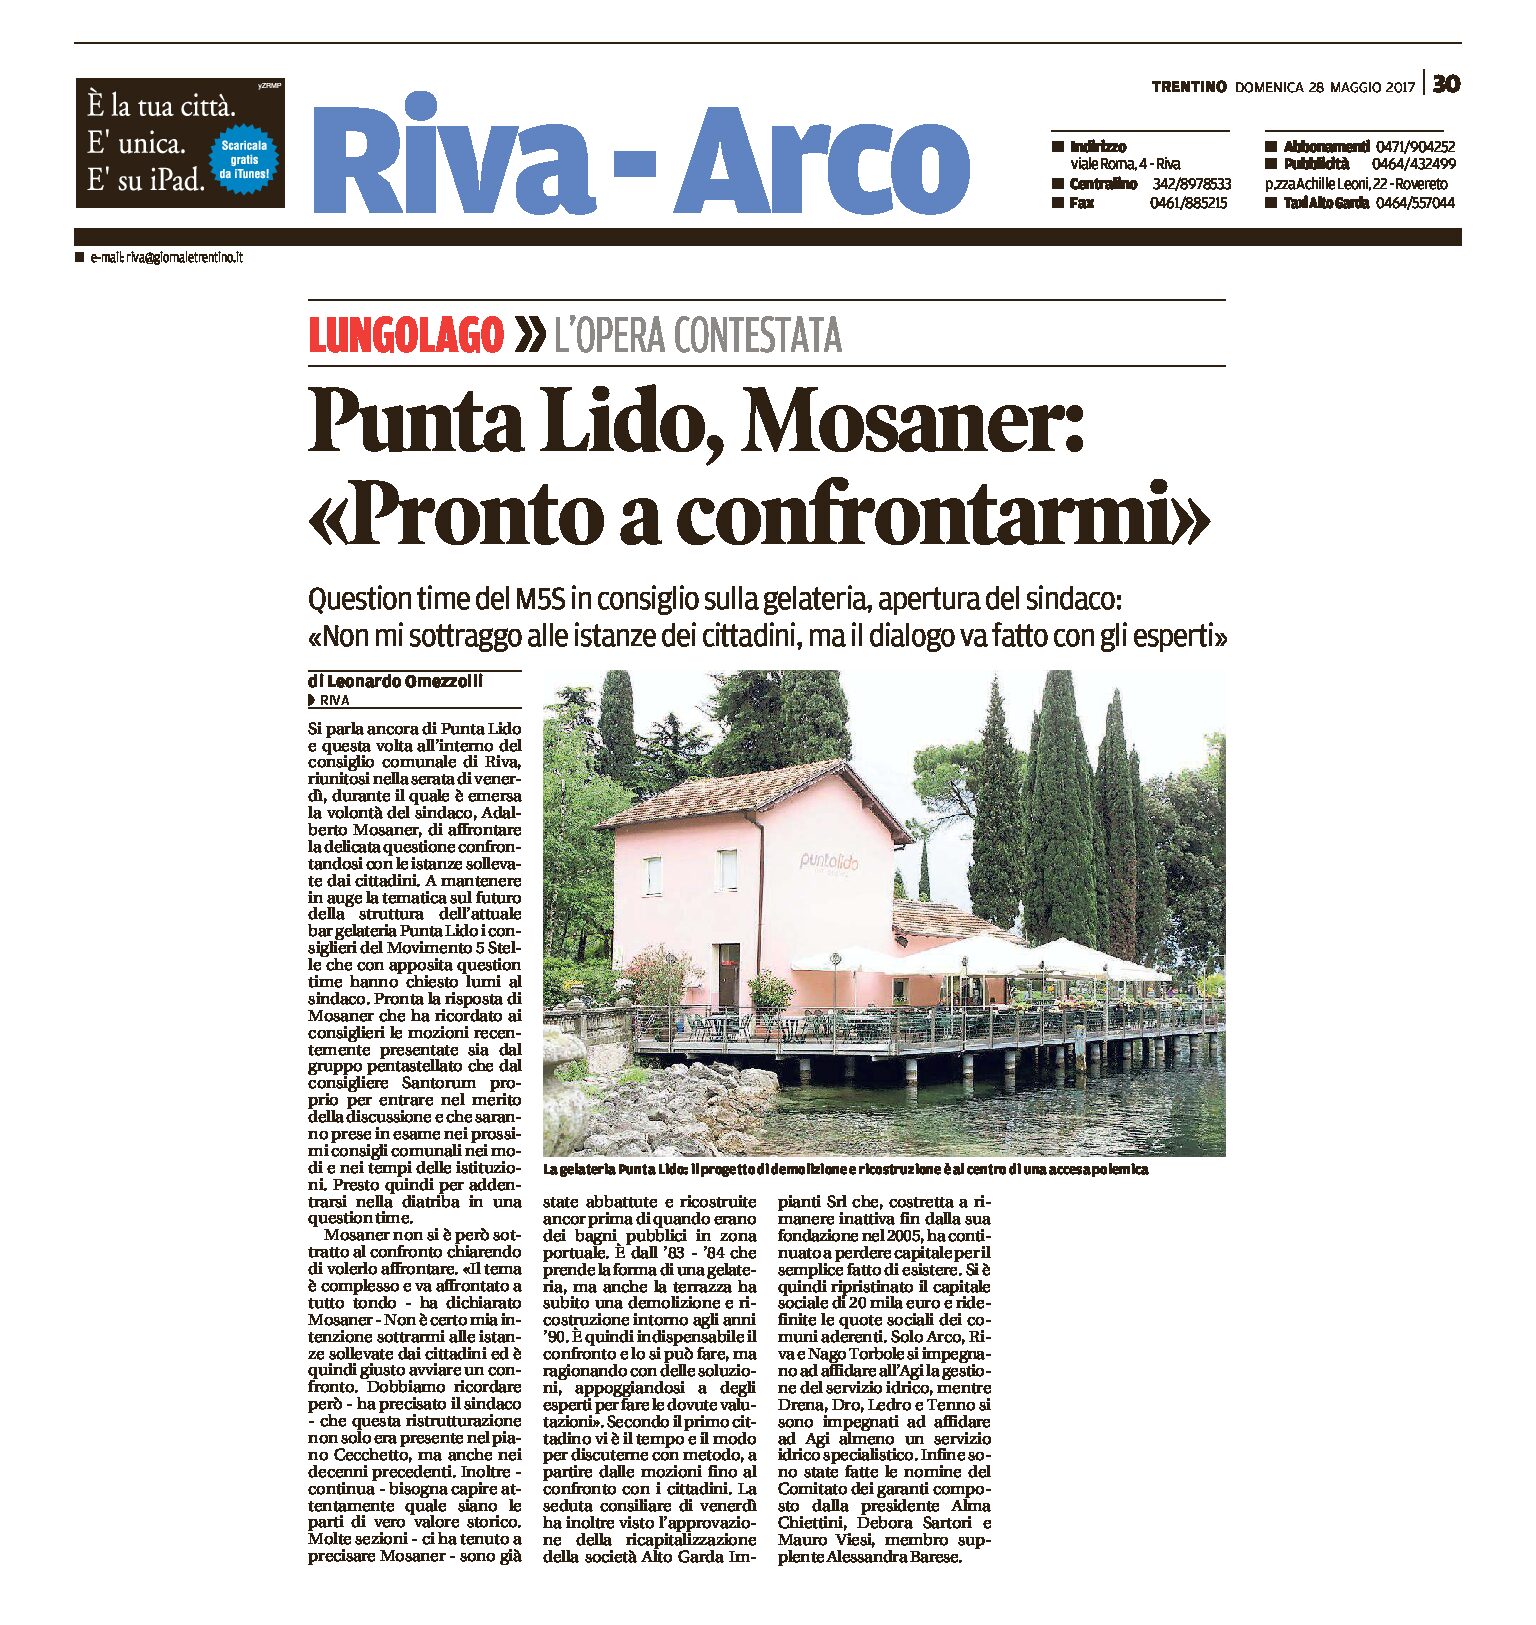 Riva, Punta Lido: Mosaner “pronto a confrontarmi”